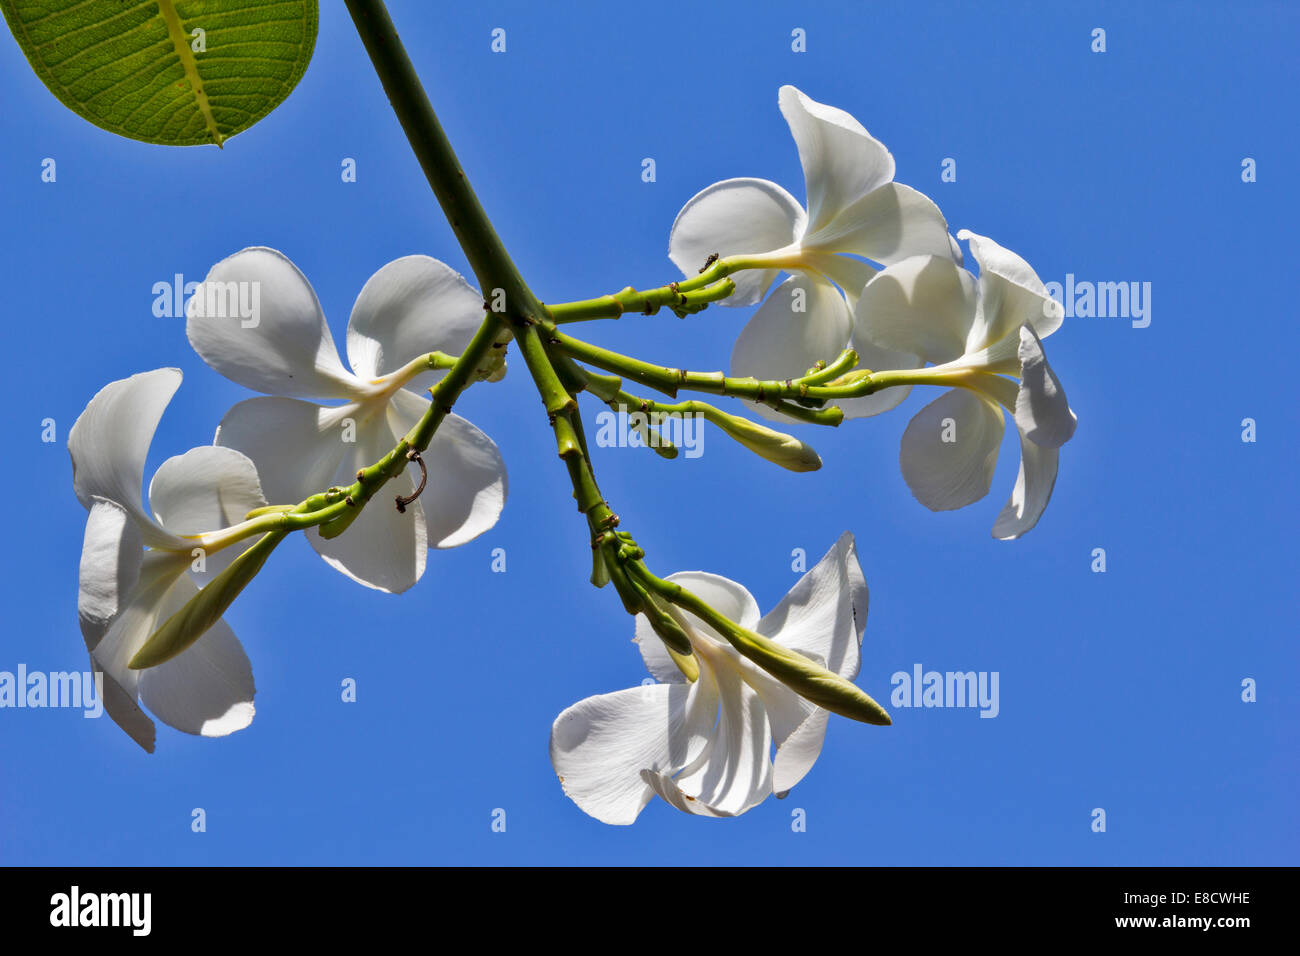 WHITE FRANGIPANI  [ PLUMERIA ] FLOWERS AGAINST A BLUE SKY Stock Photo